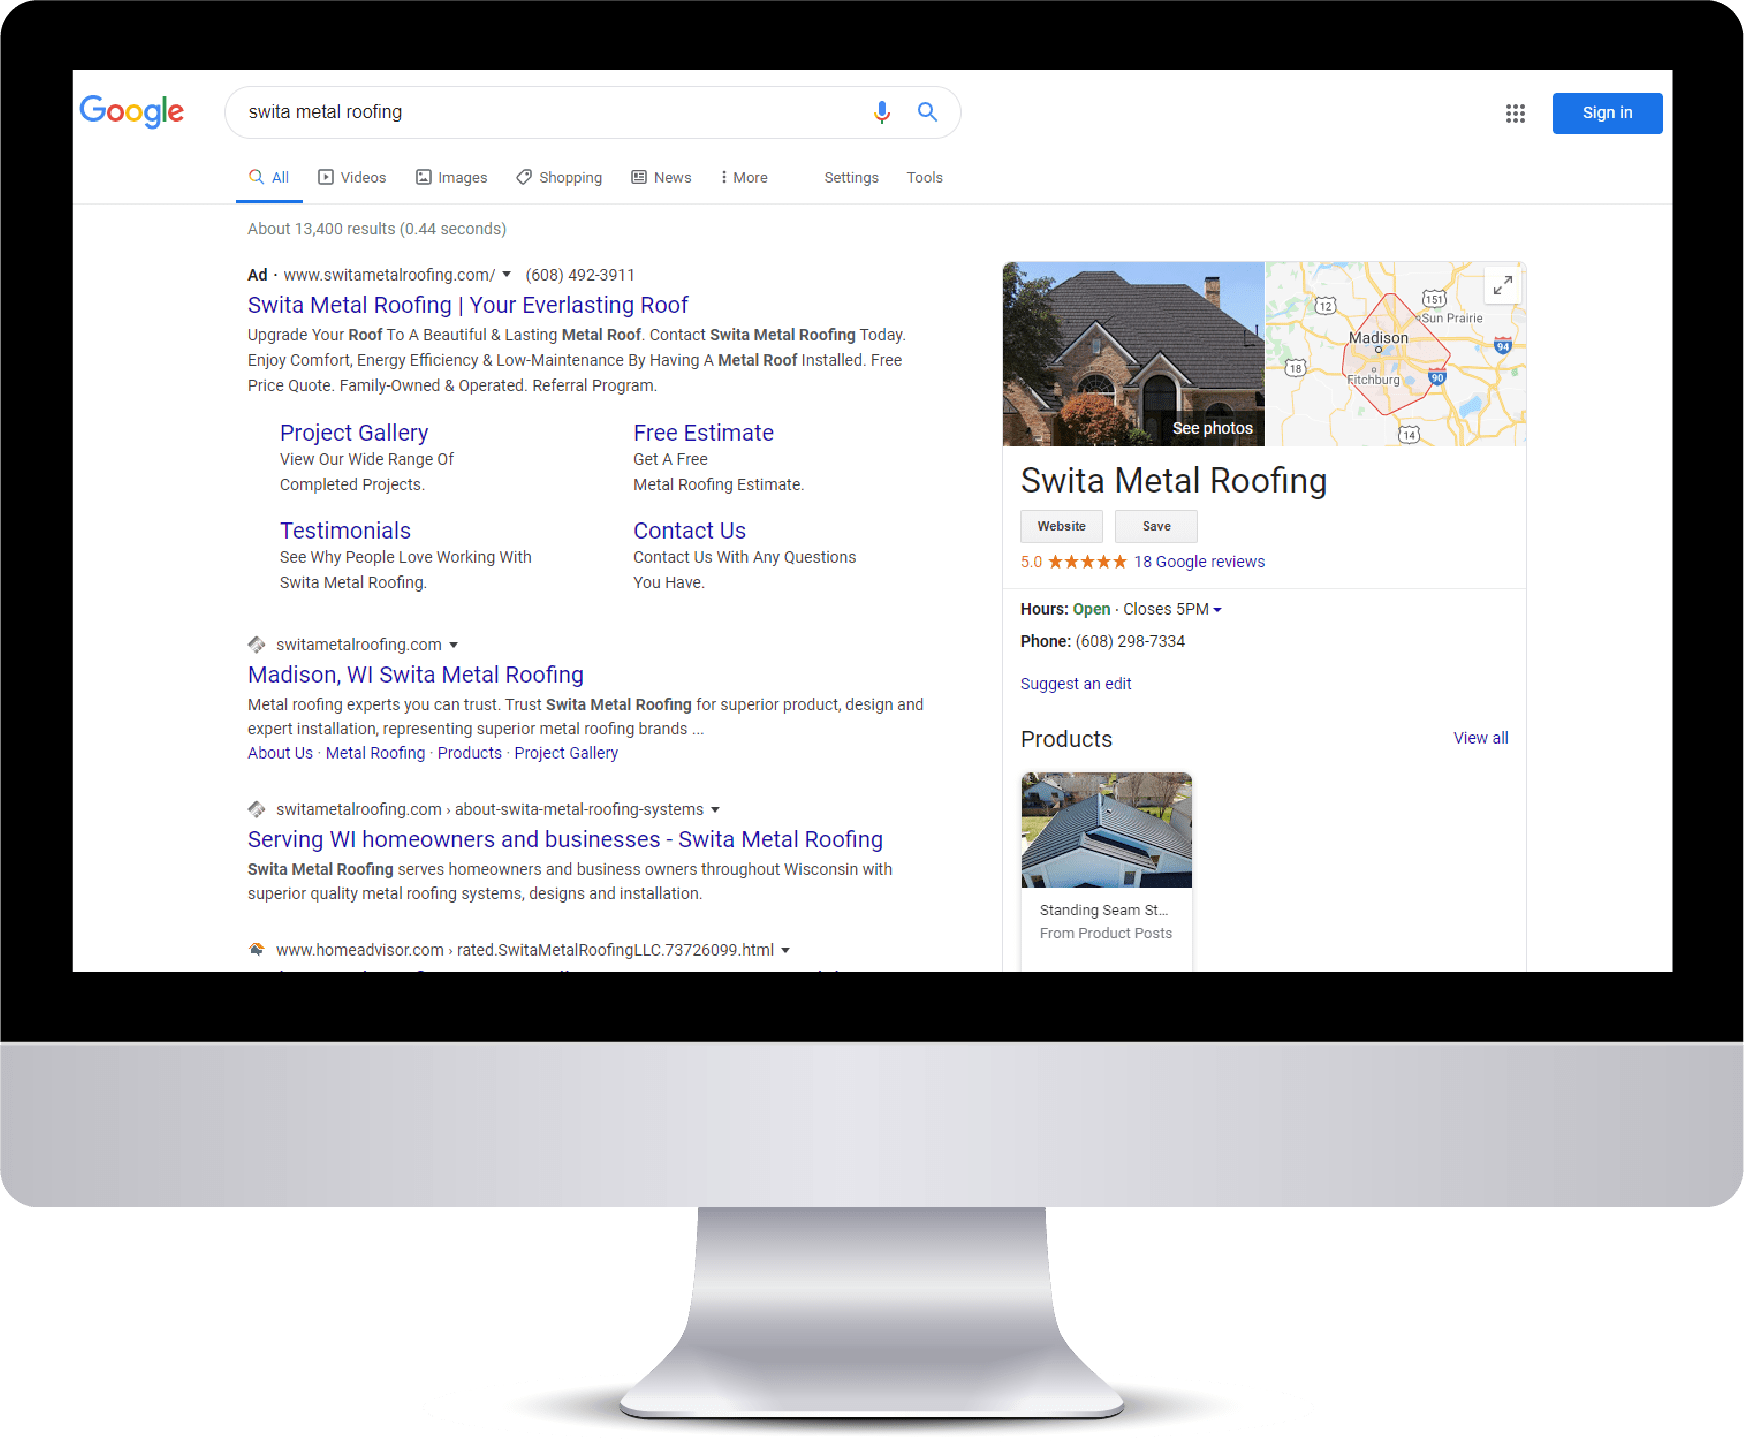 Swita Metal Roofing Google search results on desktop